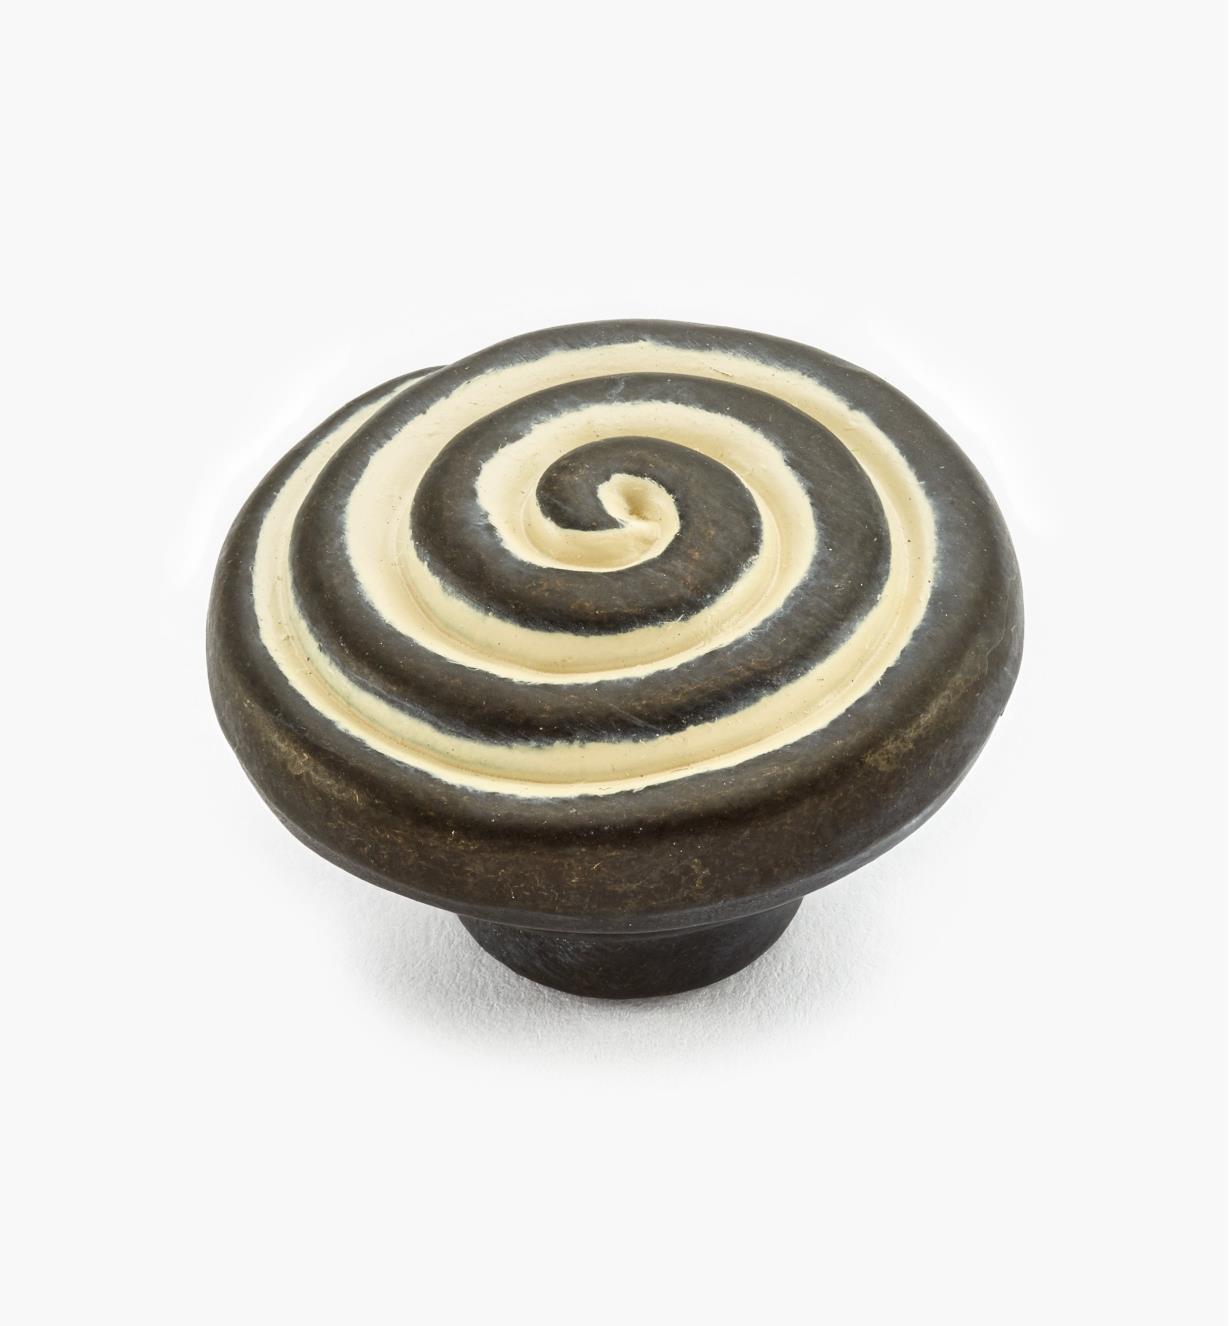 02W3603 - Bouton spirale de 1 1/4 po, série Rustic, fini Biscayne antique